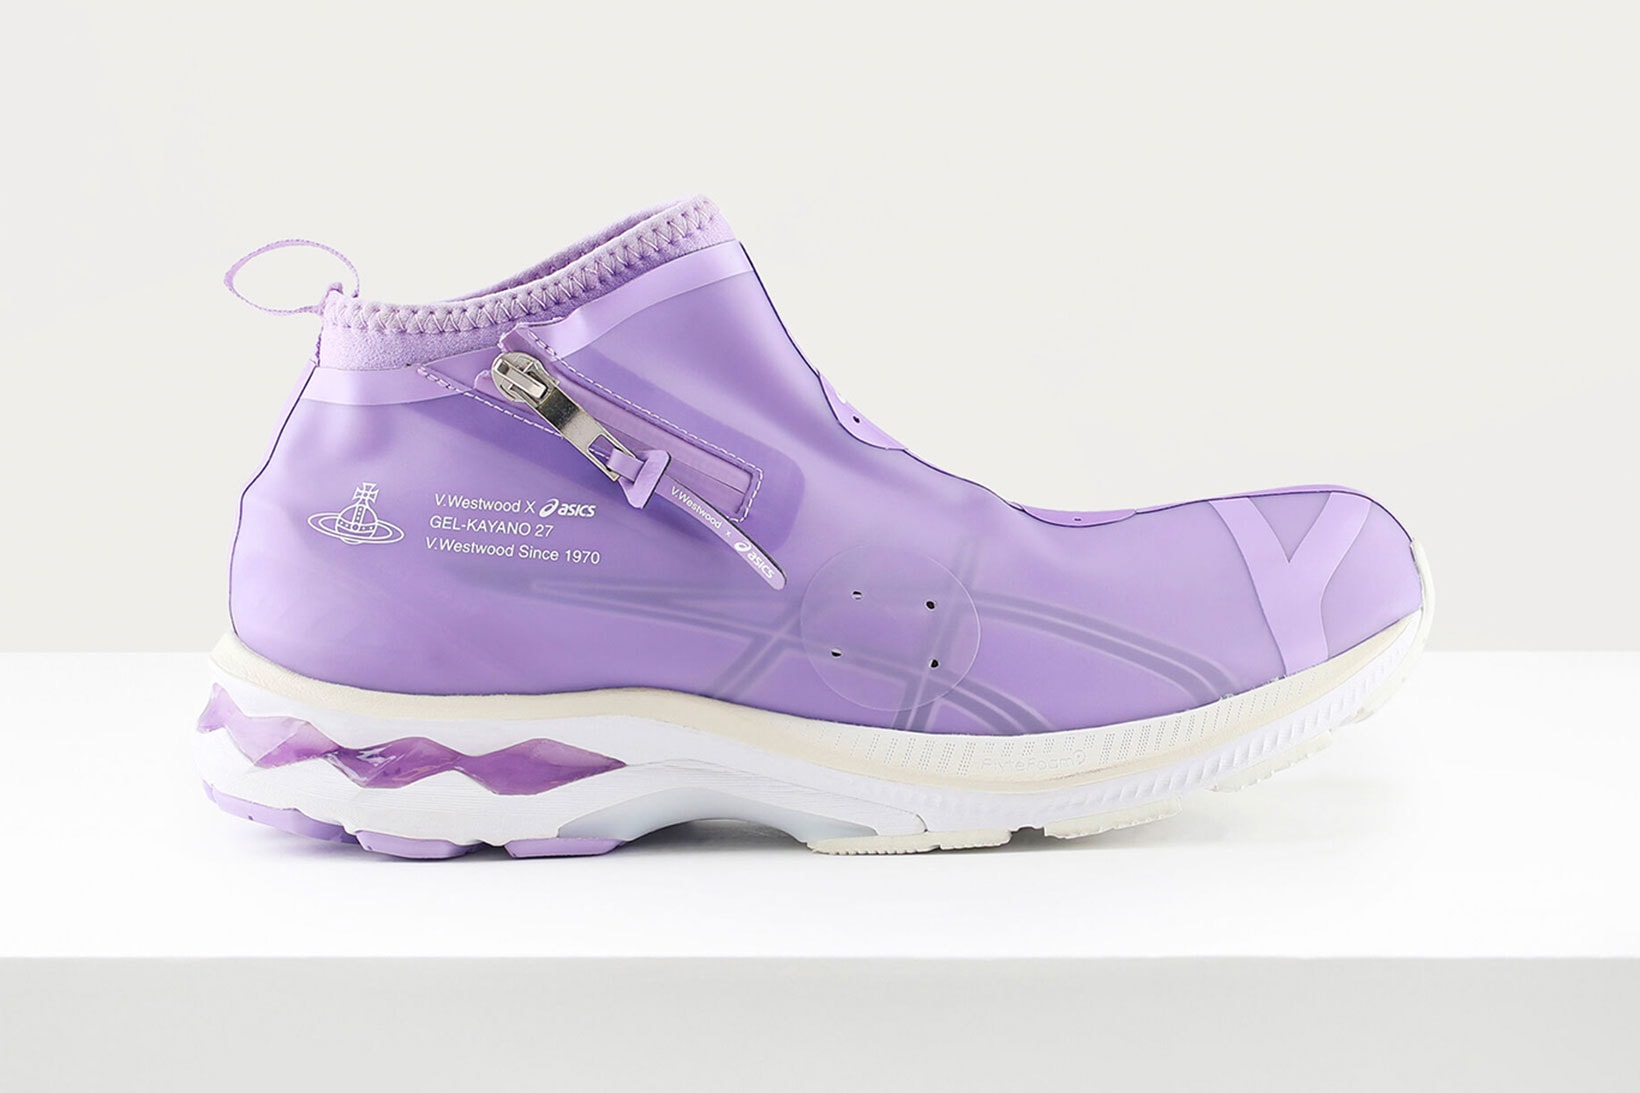 vivienne westwood asics gel kayano 27 ltx sneakers collaboration lilac purple